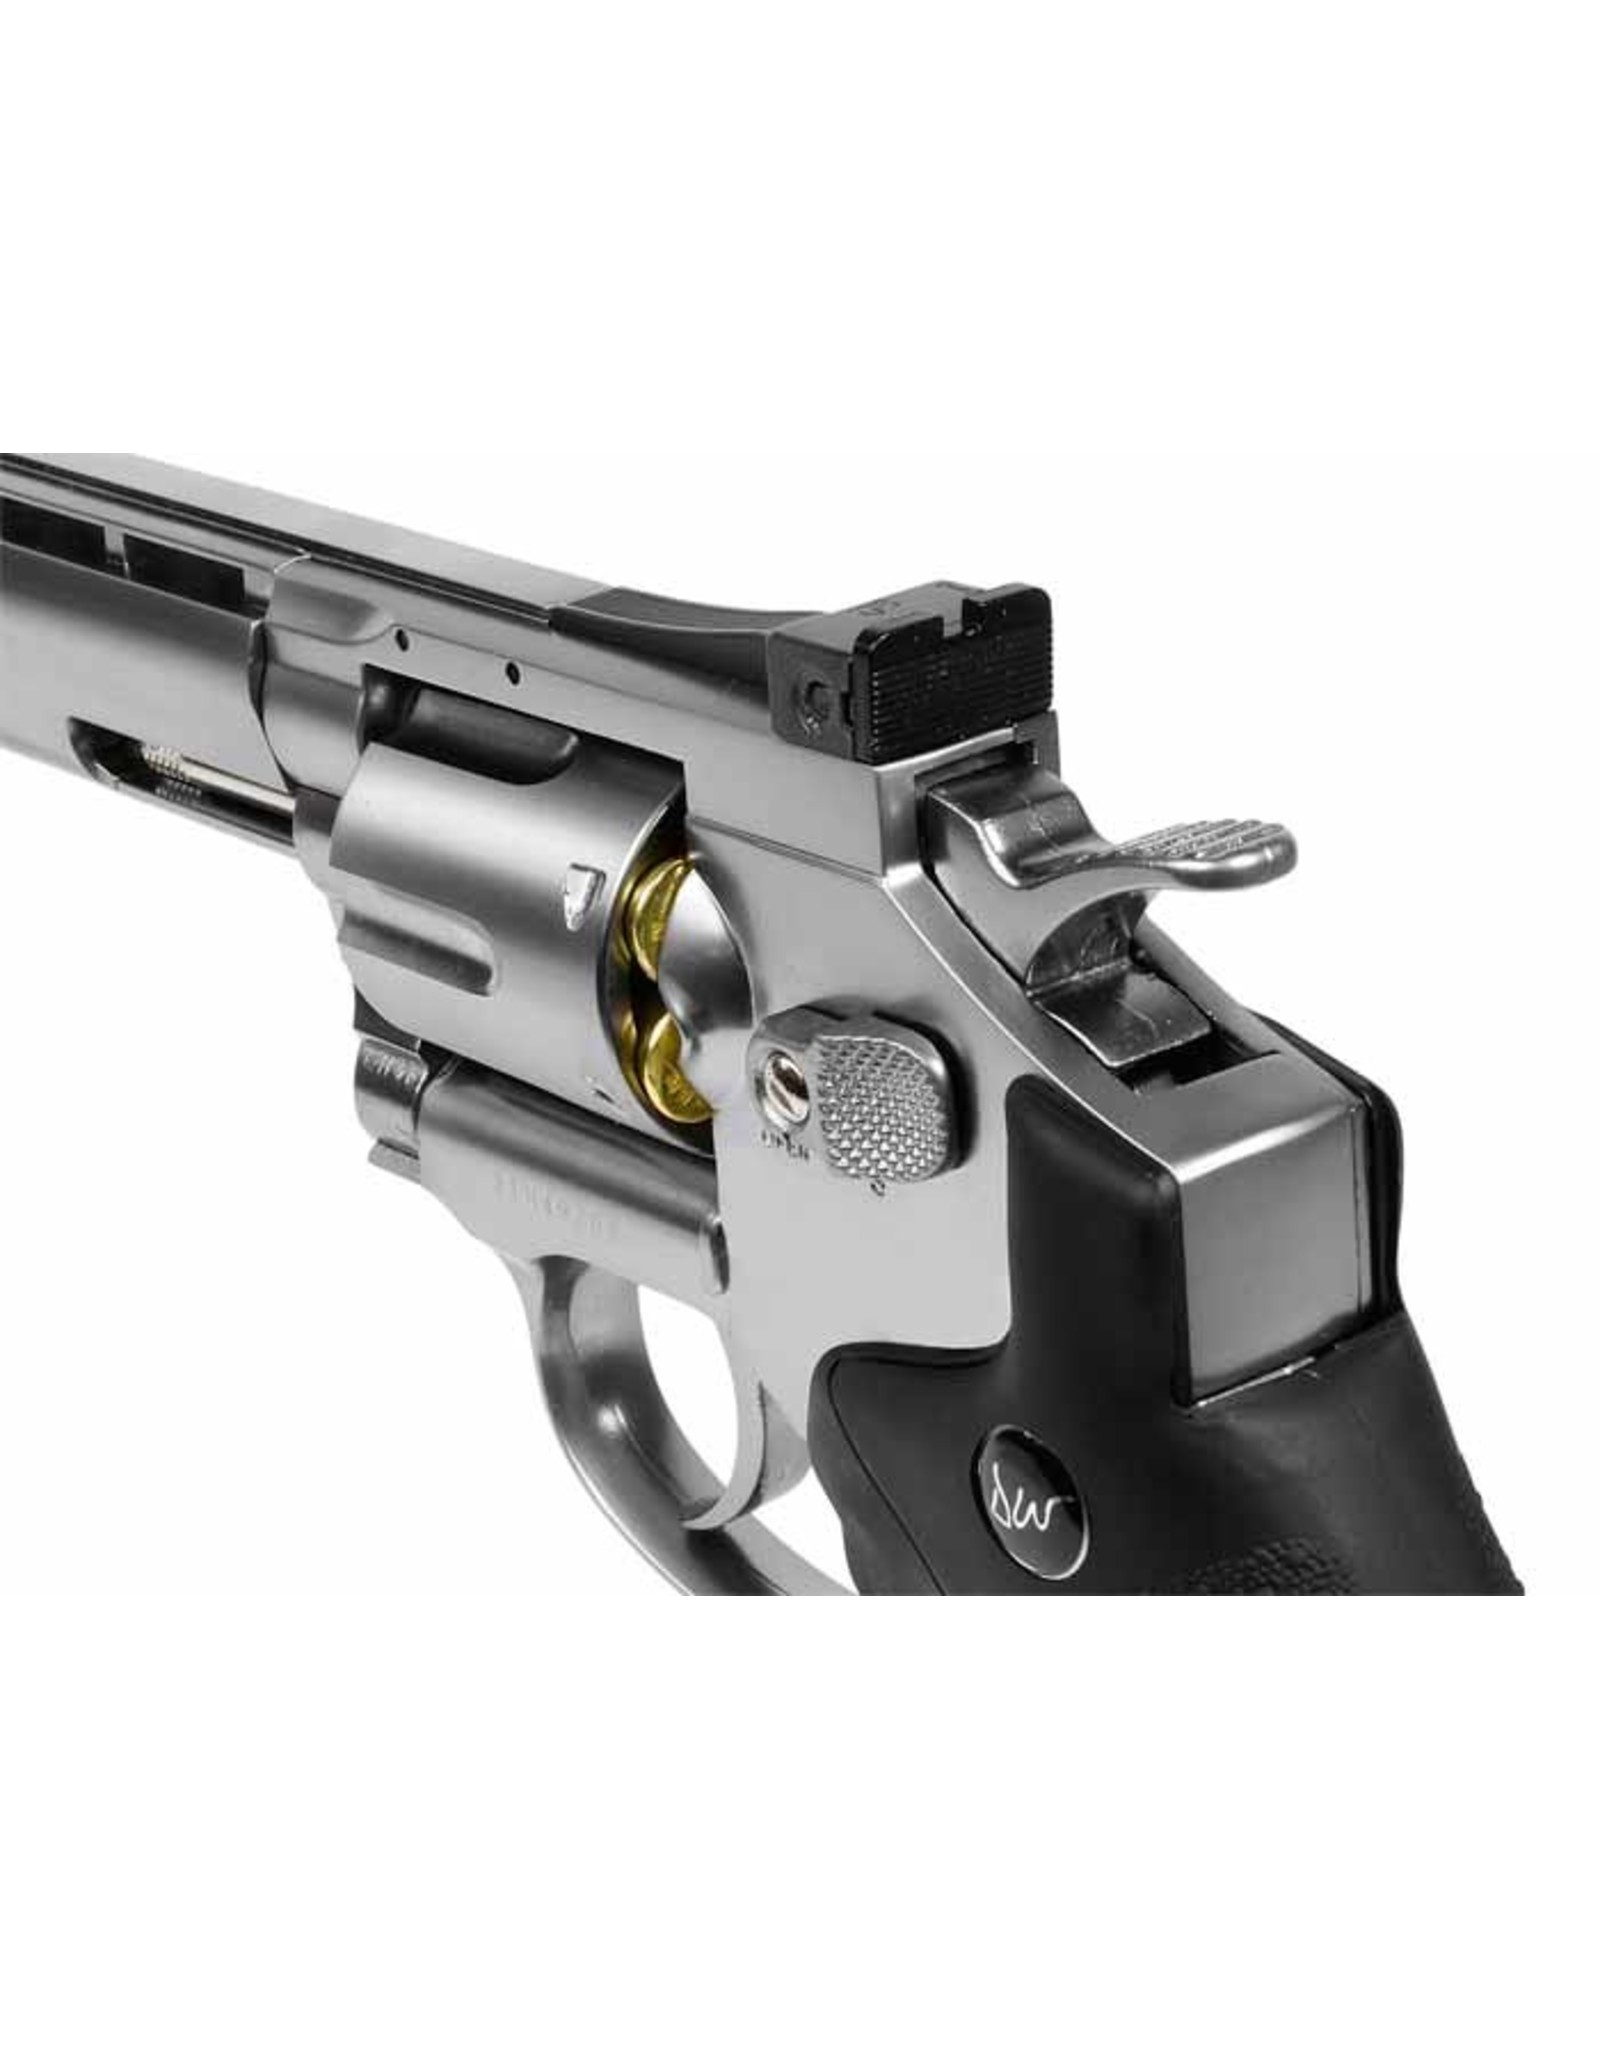 Dan Wesson Dan Wesson 6" BB Revolver 425 fps